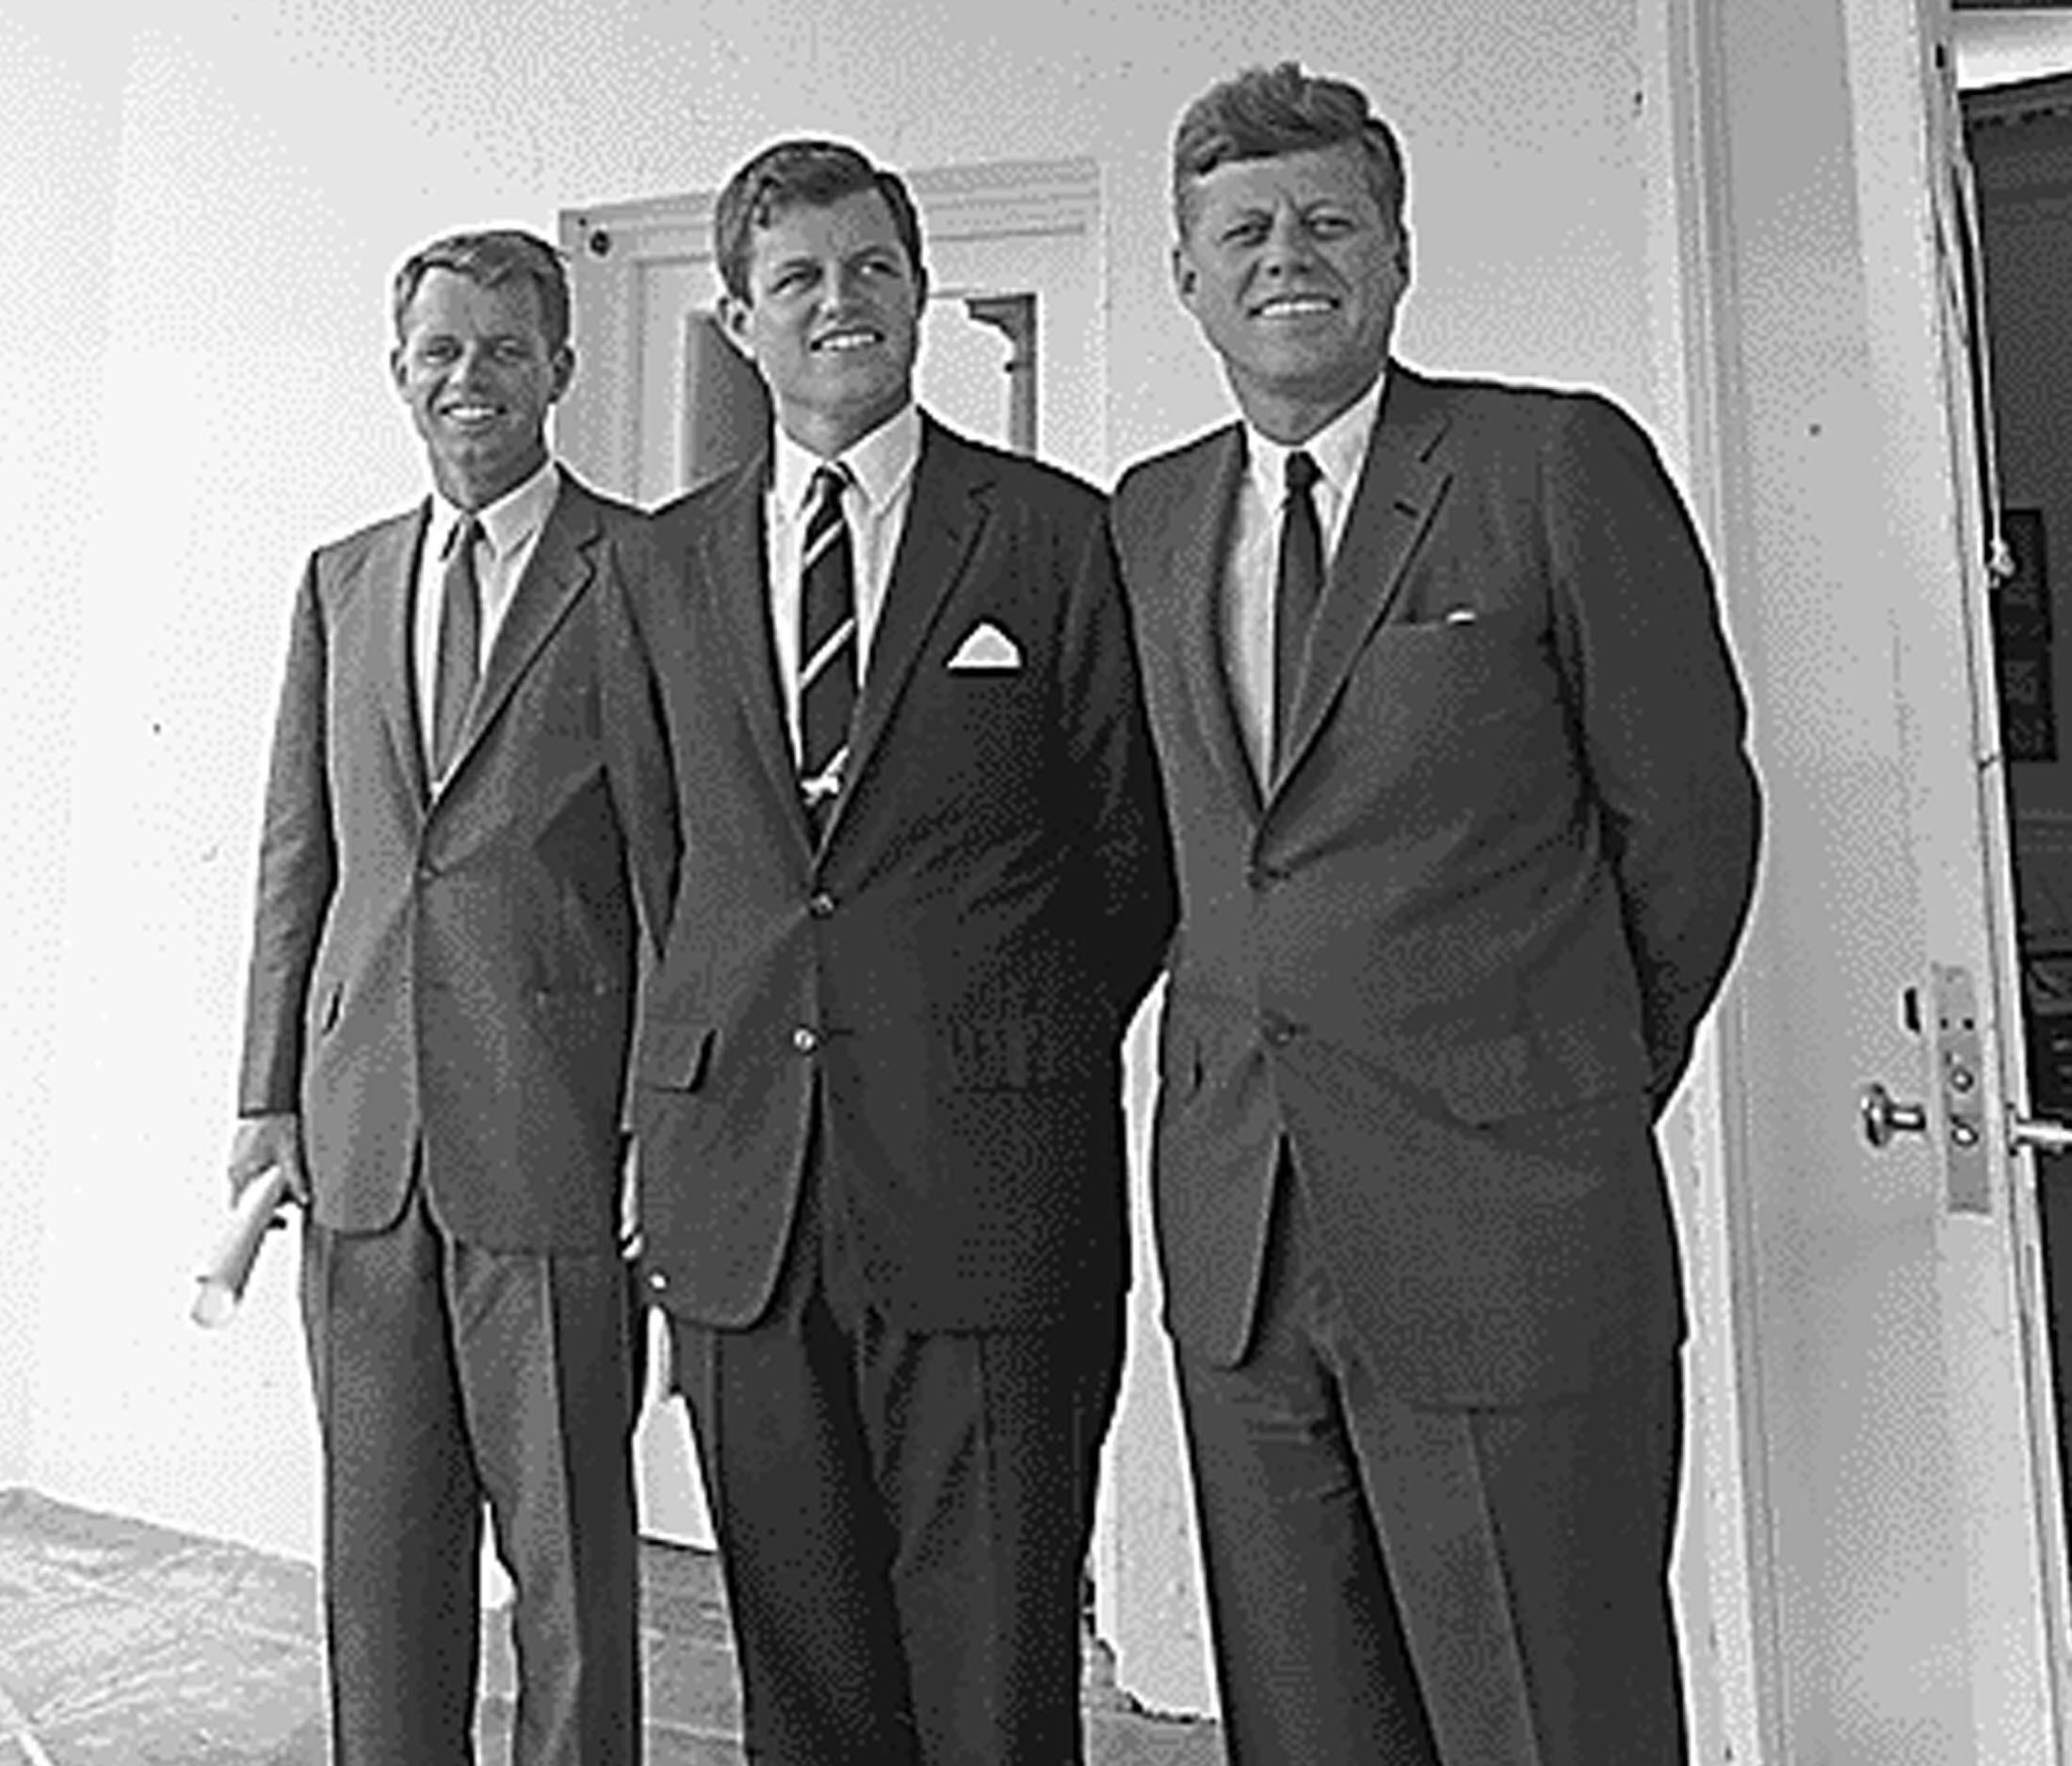 Vlnr: de broers Robert Kennedy, Edward Kennedy & John F. Kennedy